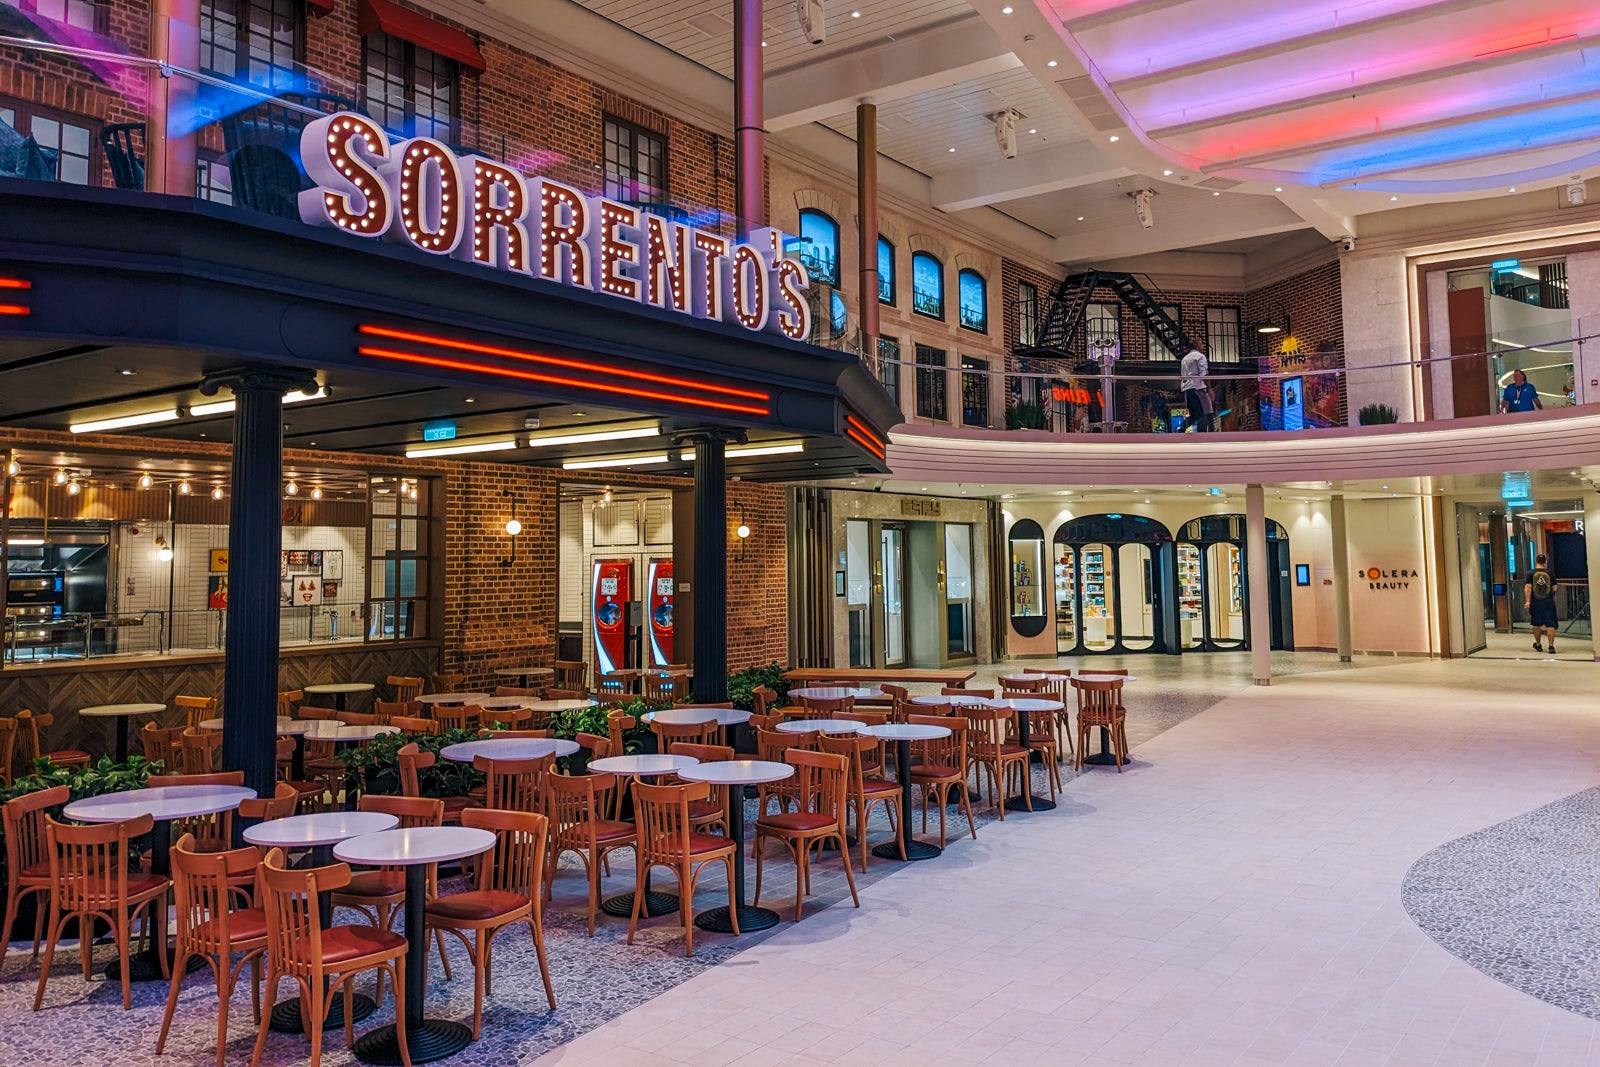 Sorrento's Pizza on Icon of the Seas' Royal Promenade